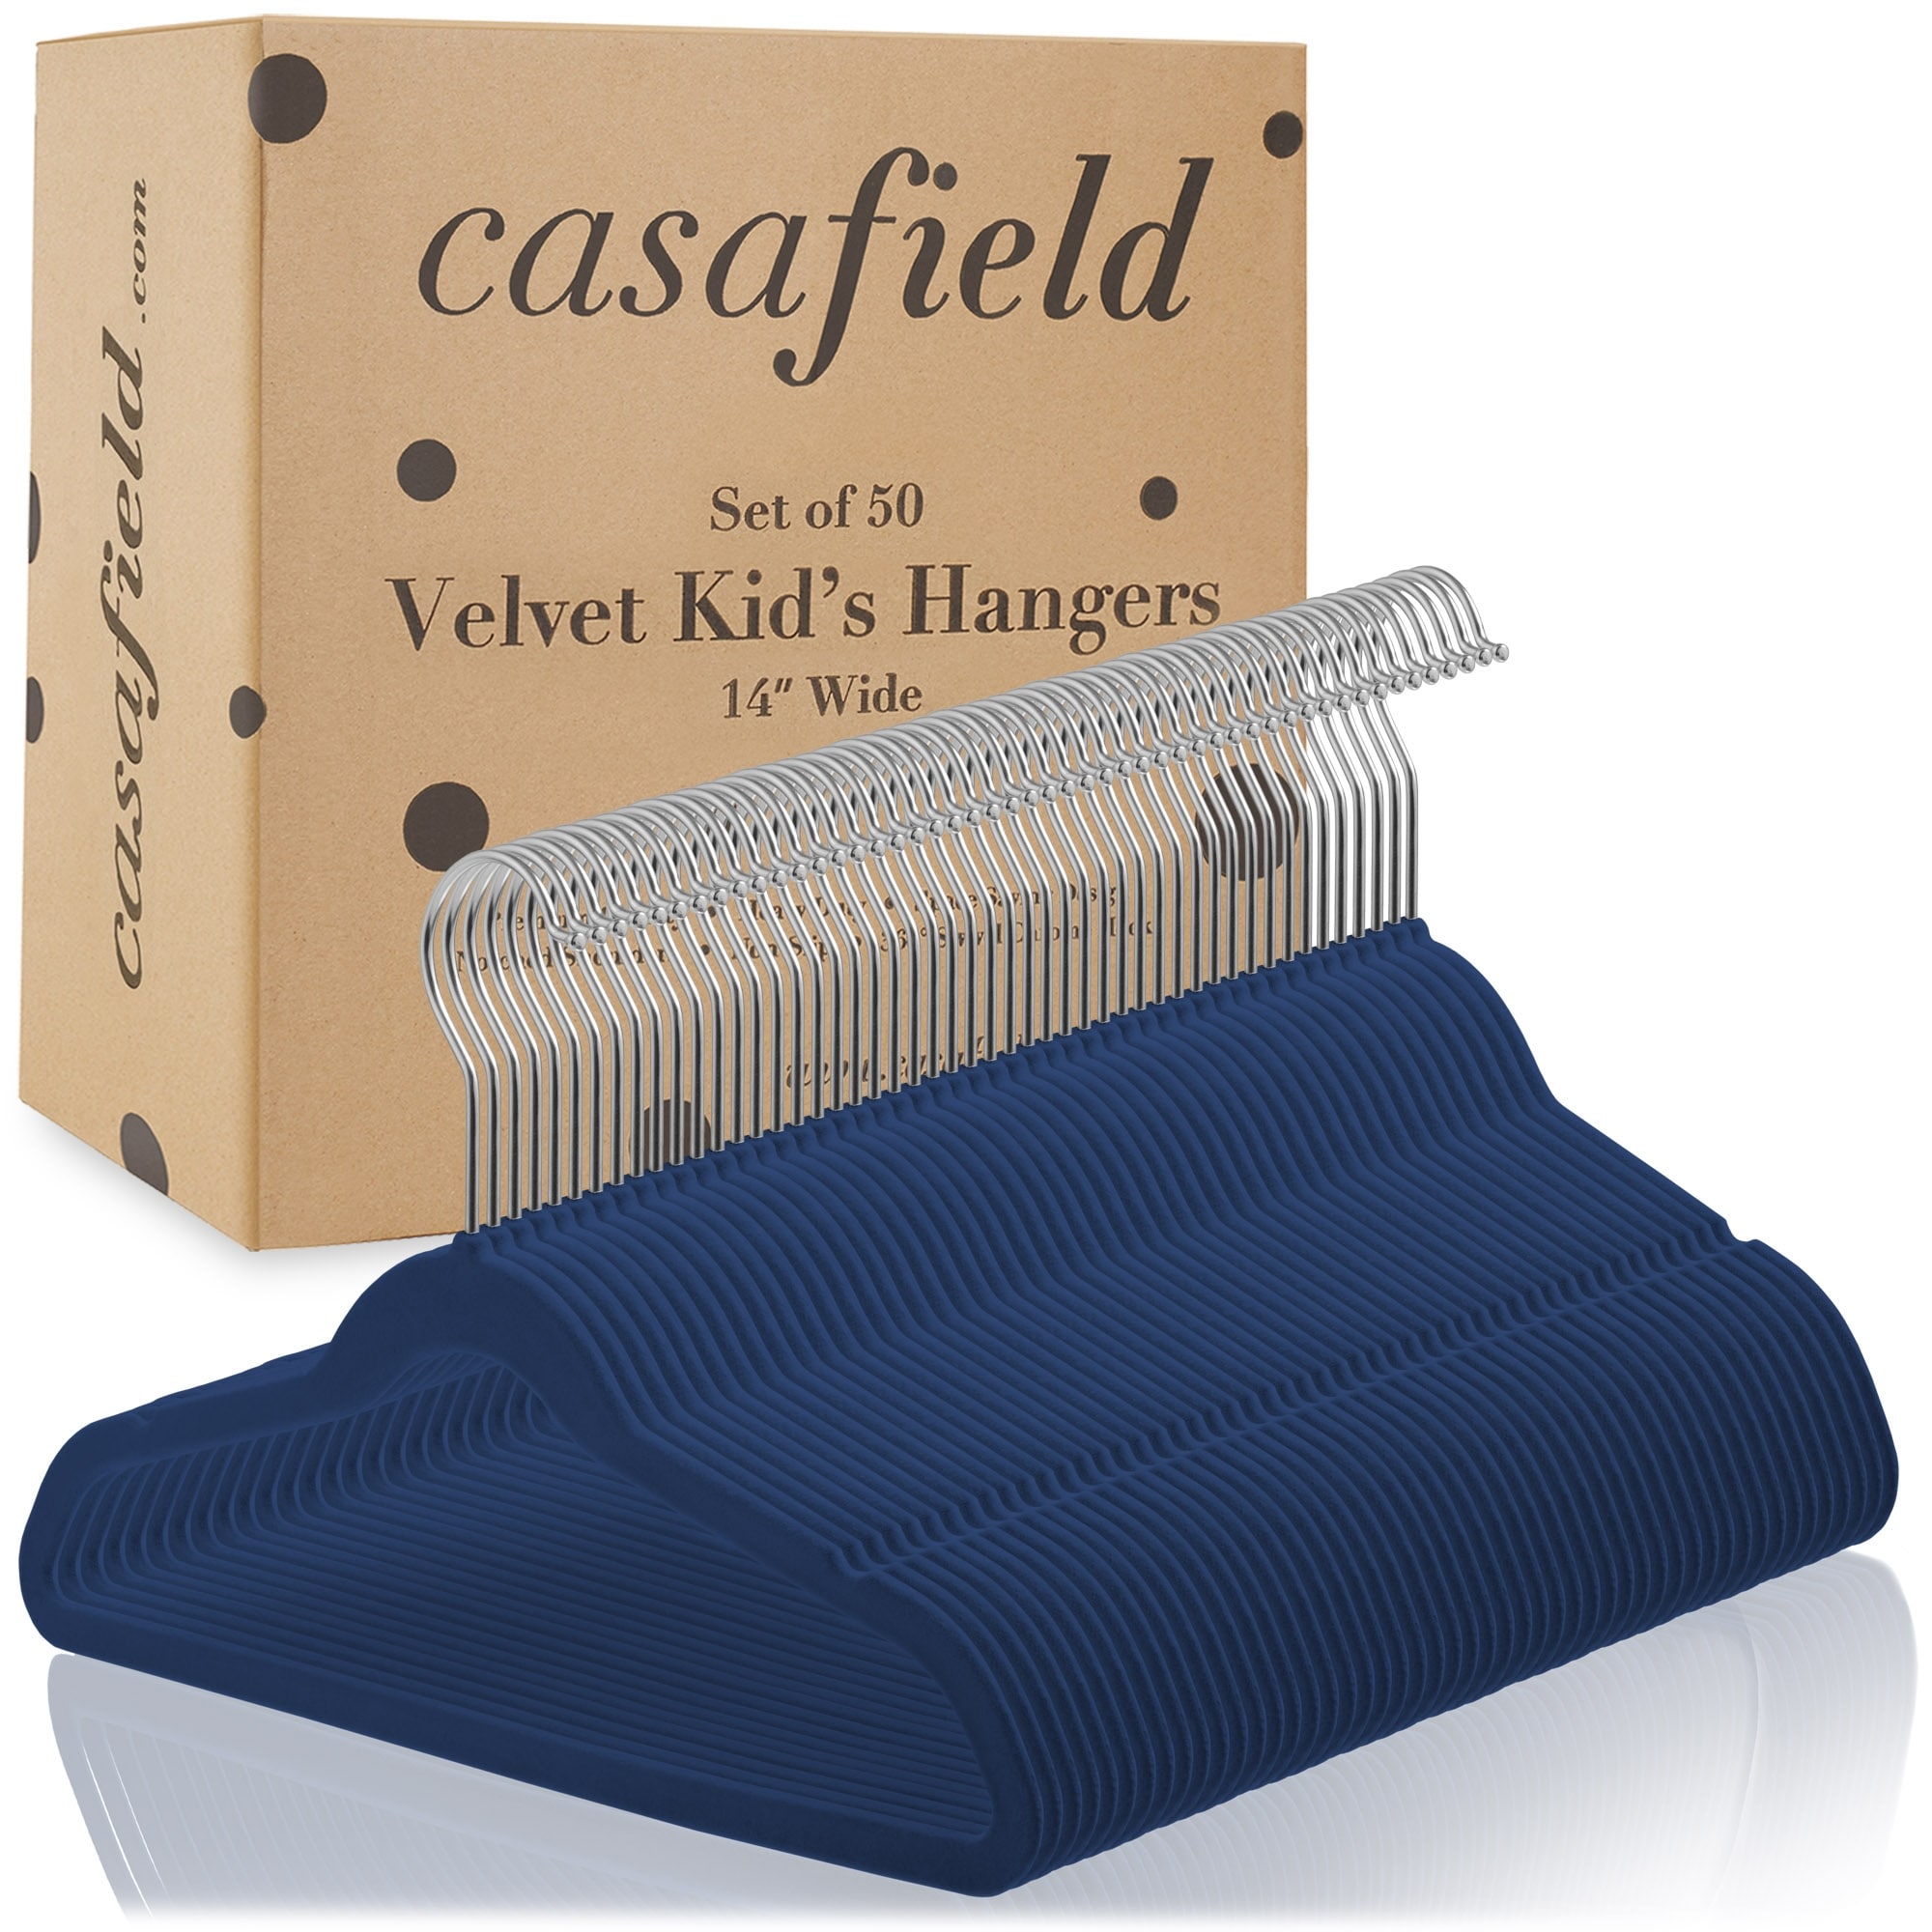 100 Velvet 11 Baby Hangers by Casafield - Bed Bath & Beyond